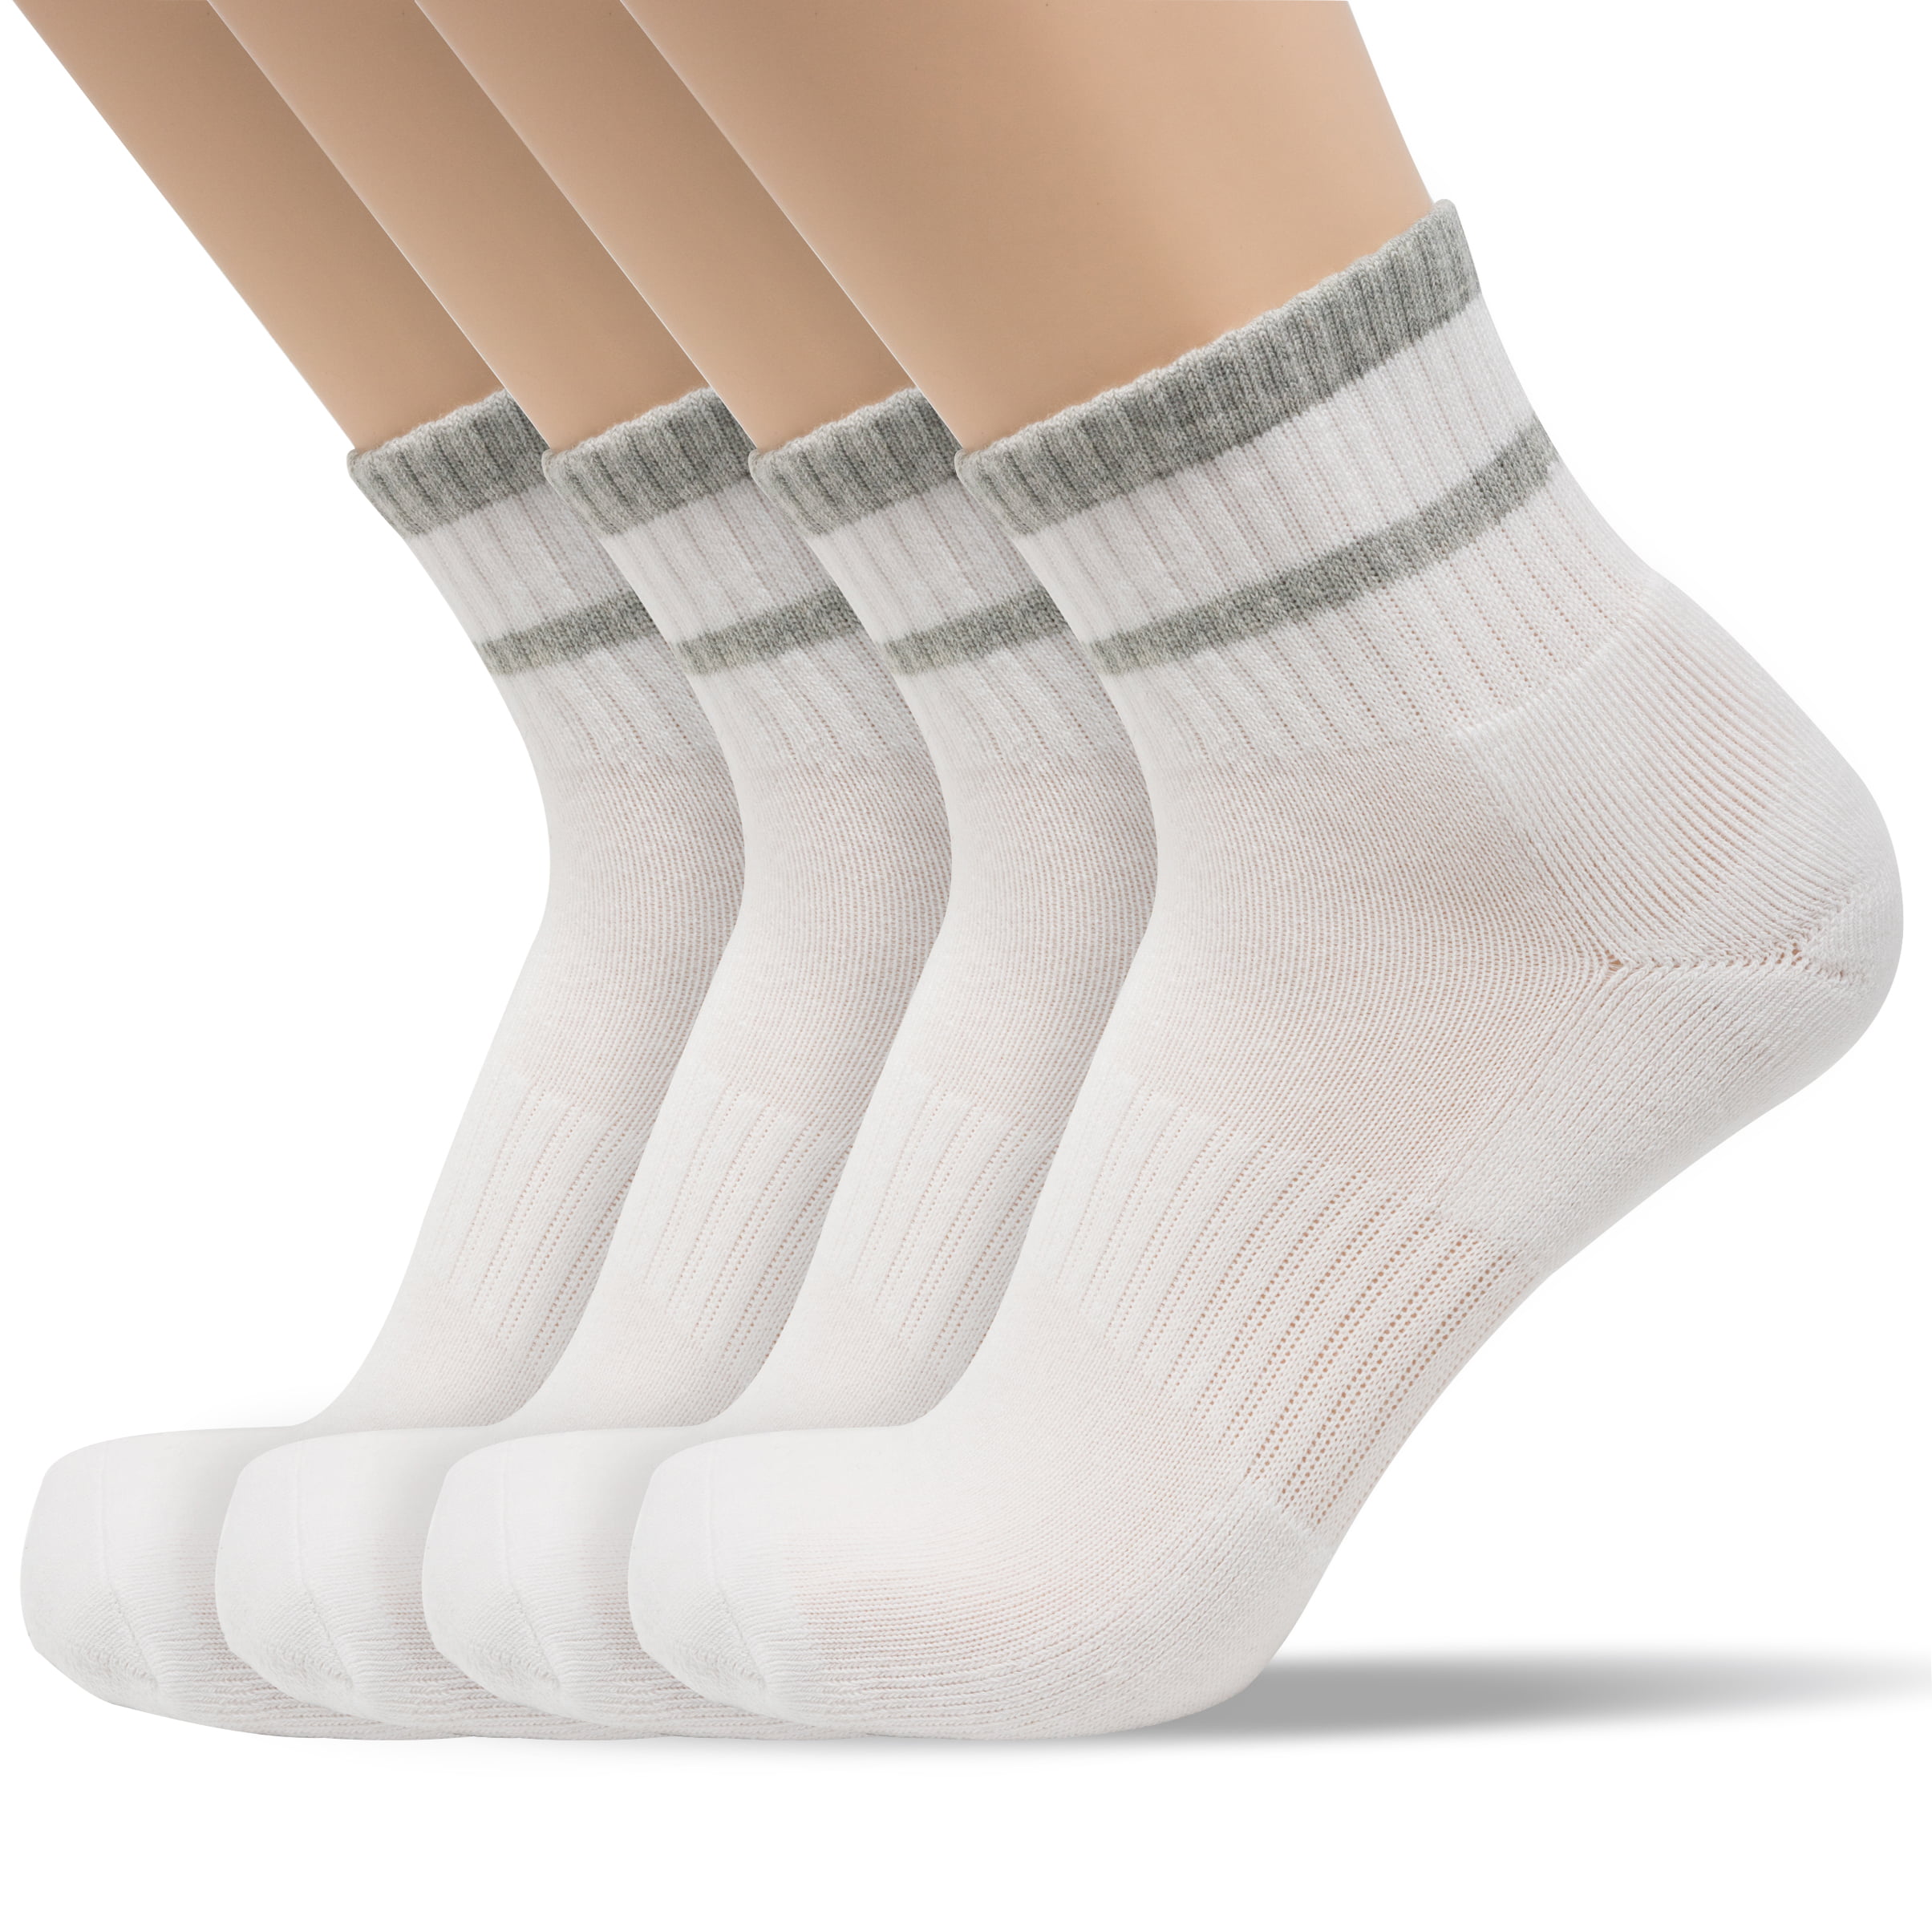 Uandi Socks Uandi Men S Performance Cotton Mid Cut Quarter Athletic Socks 4 Pack